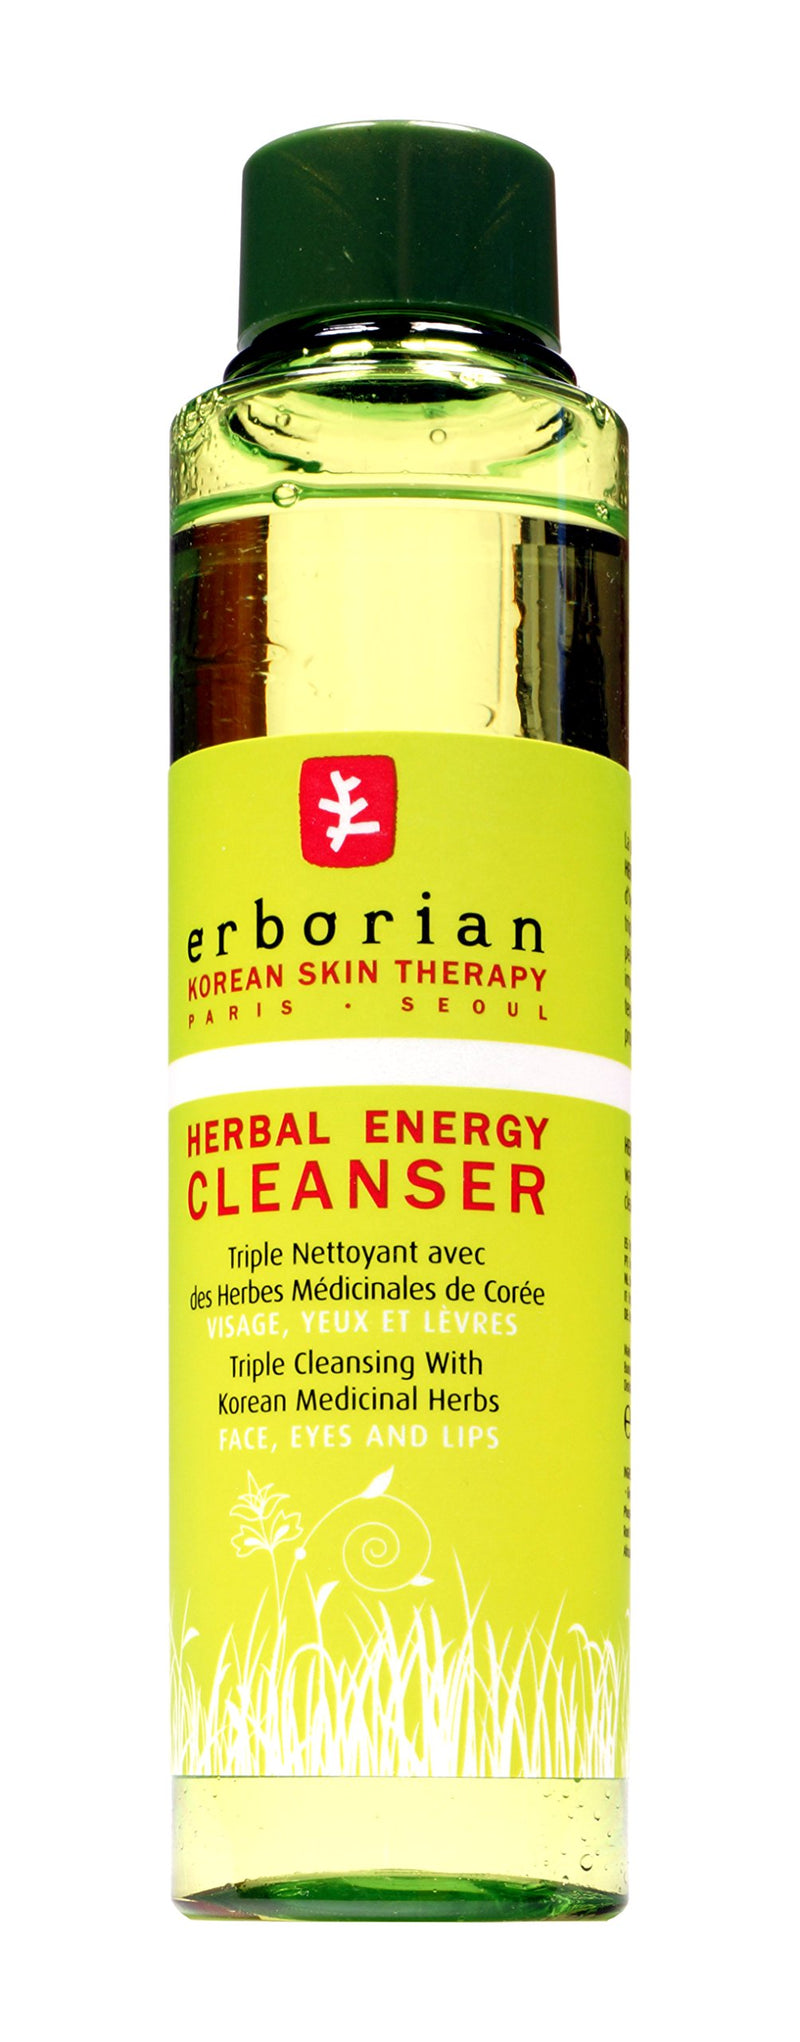 Erborian Herbal Energy Cleanser 4.7oz, 140ml